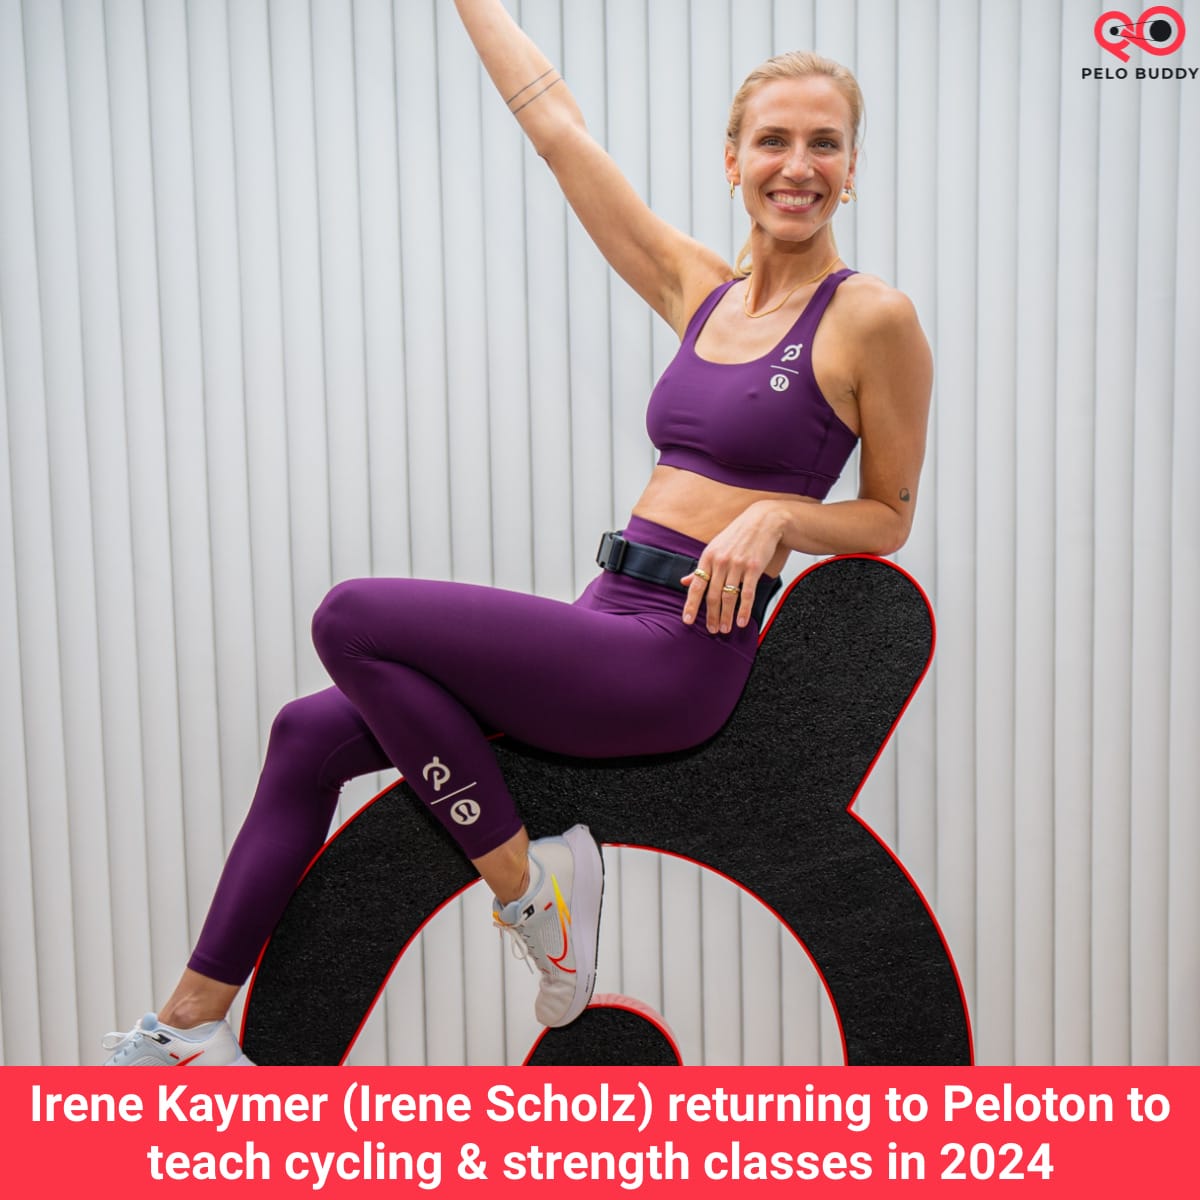 Irene Kaymer / Irene Scholz rejoining Peloton to teach cycling & strength  classes in 2024 - Peloton Buddy